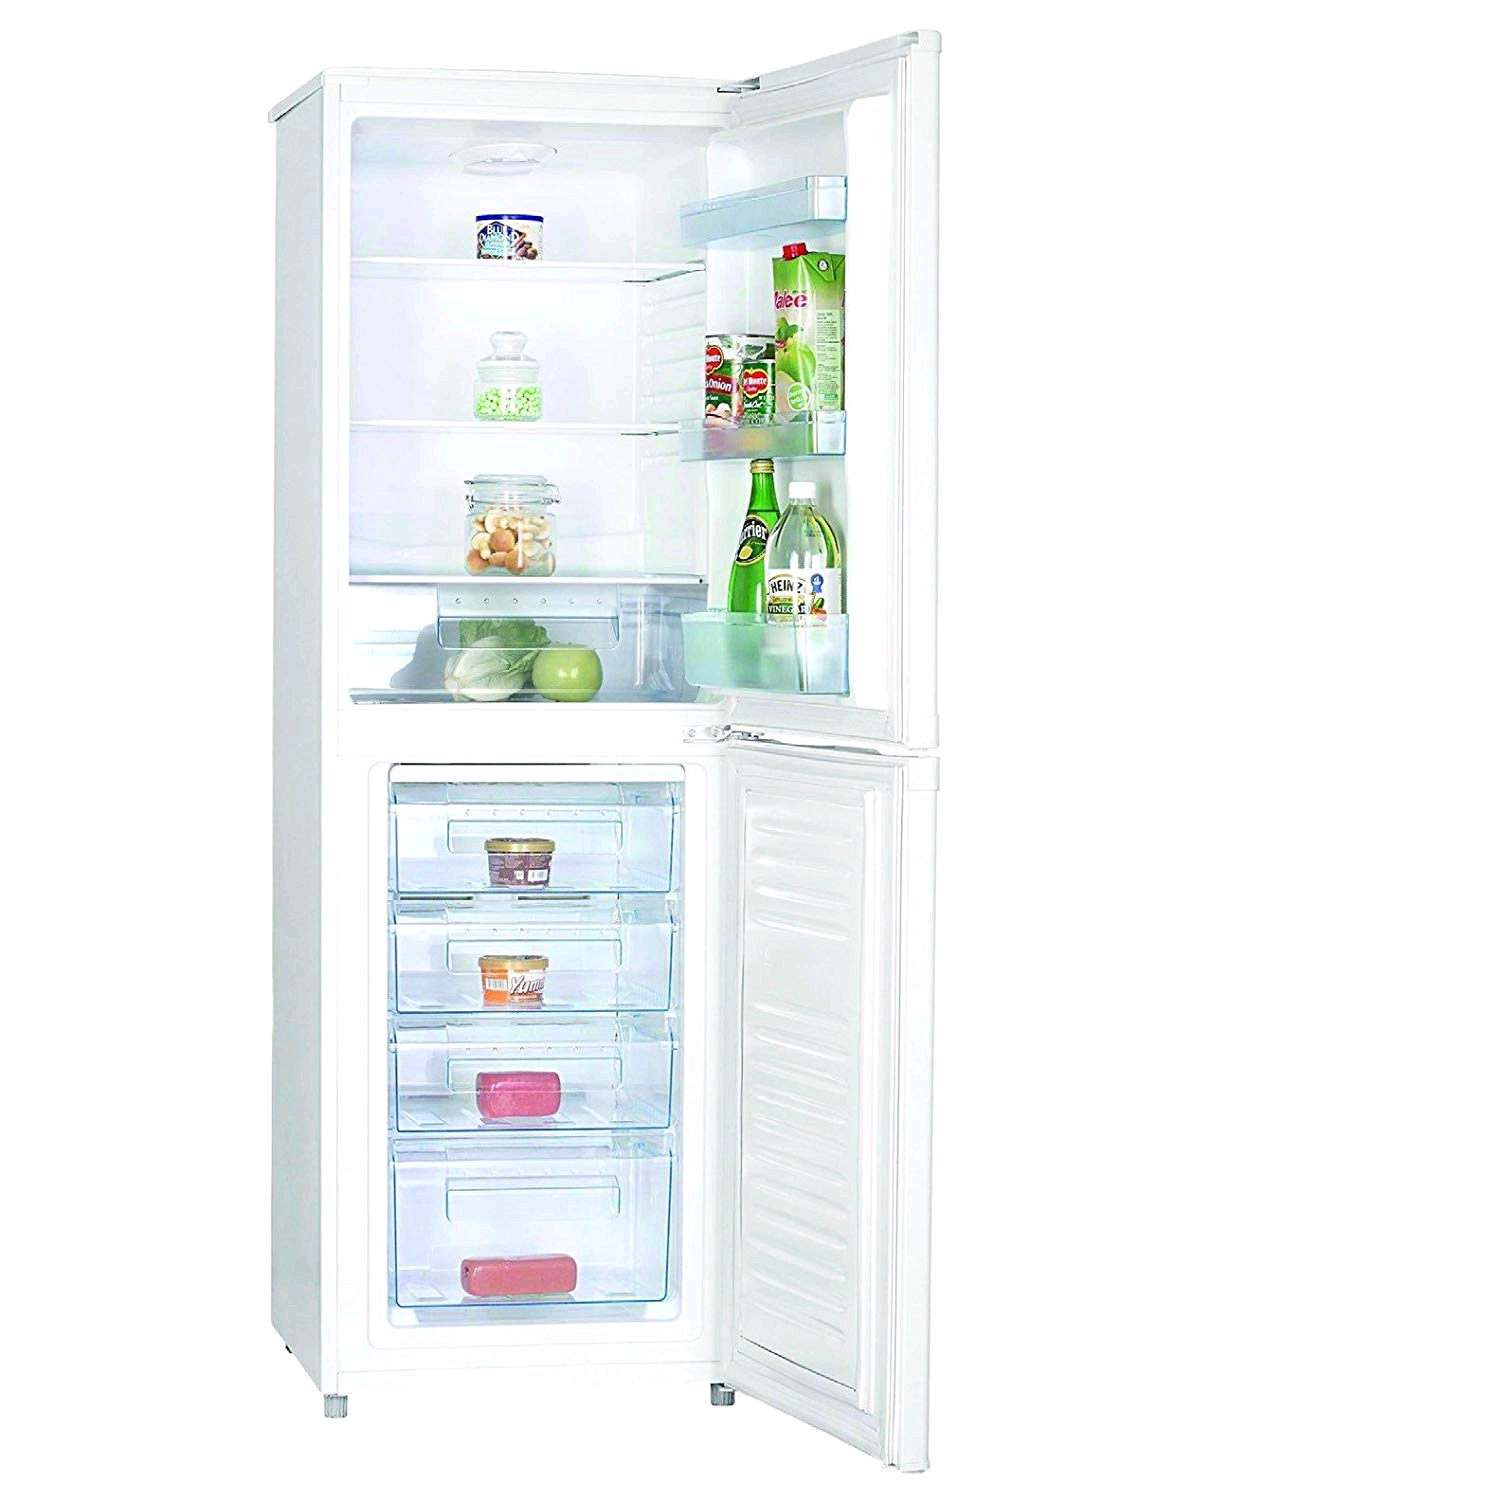 Холодильник через 1. ICEKING ik8951we 48cm Freestanding 50/50 Split Fridge Freezer – White - frydge uk.